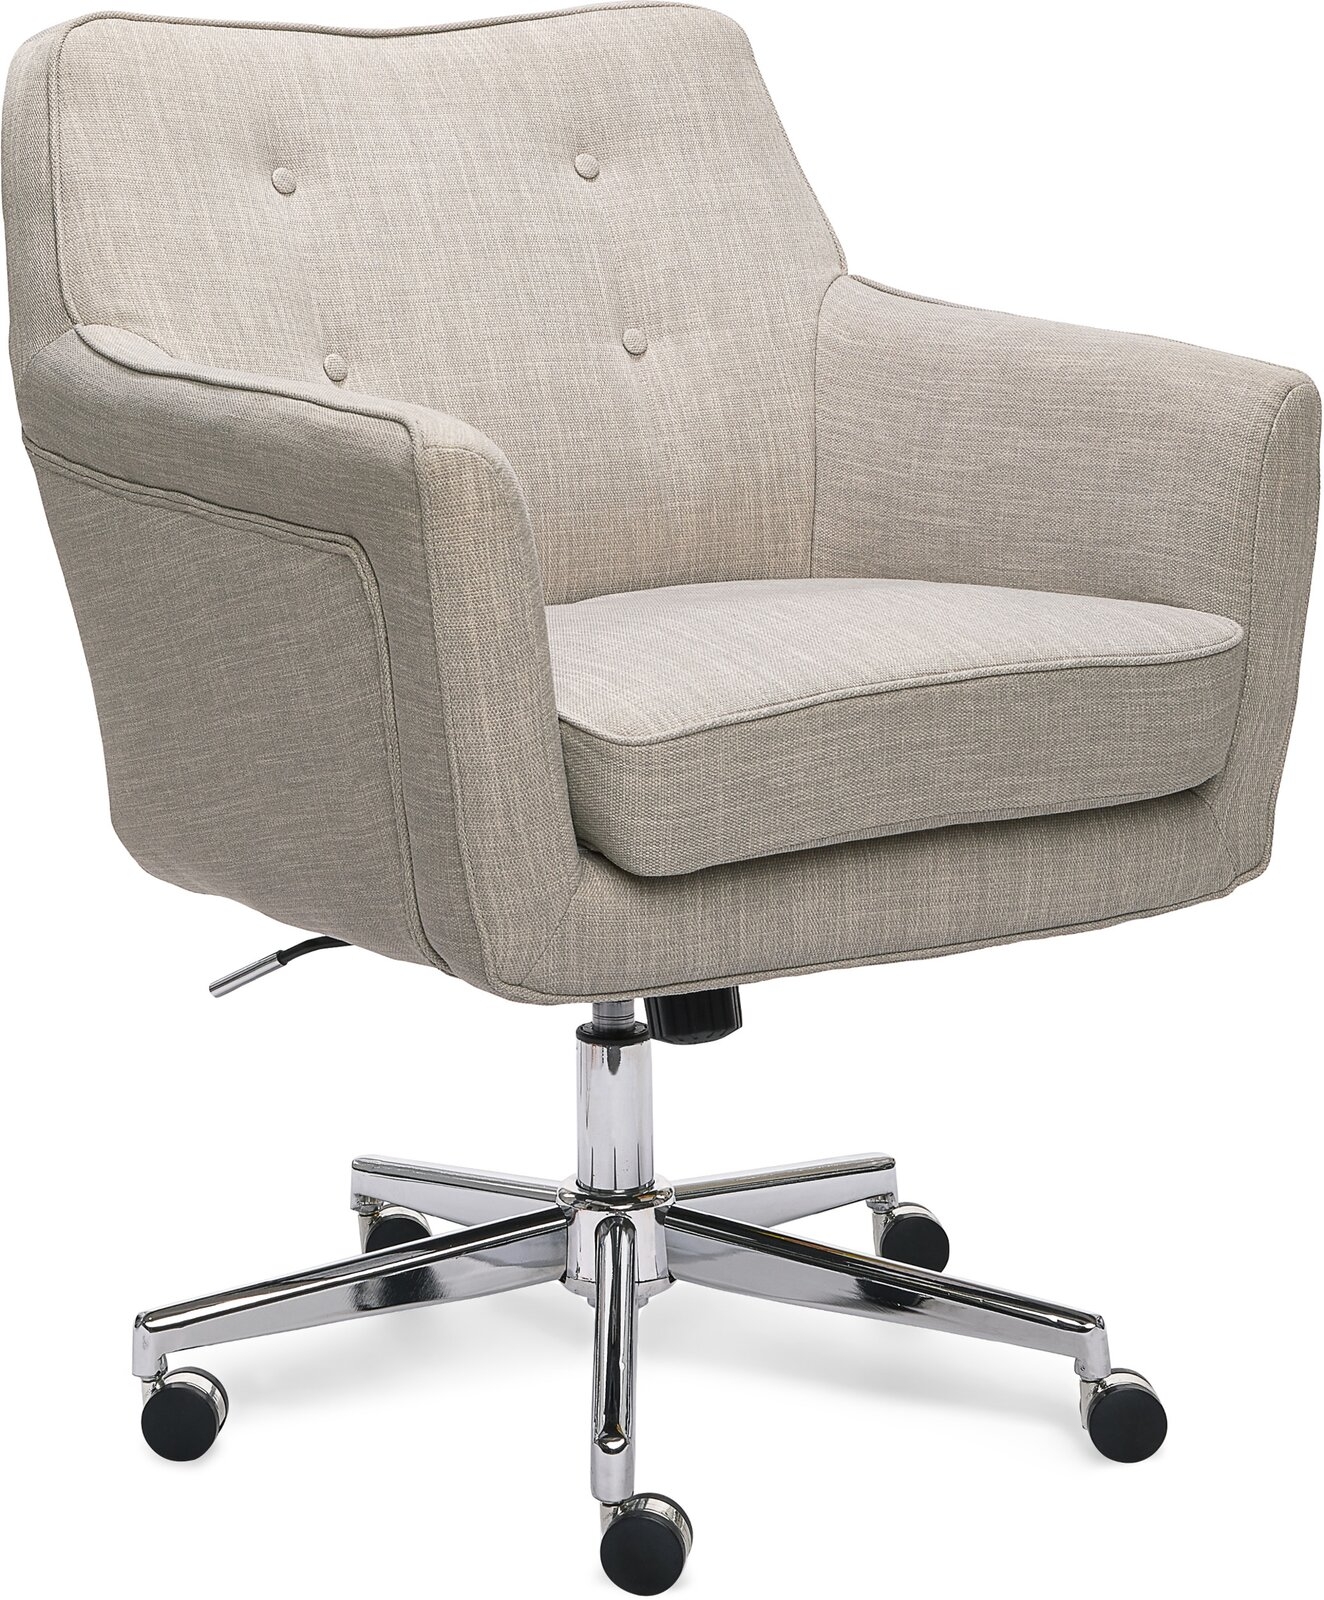 Serta Ashland Mid-Back Desk Chair - Image 0